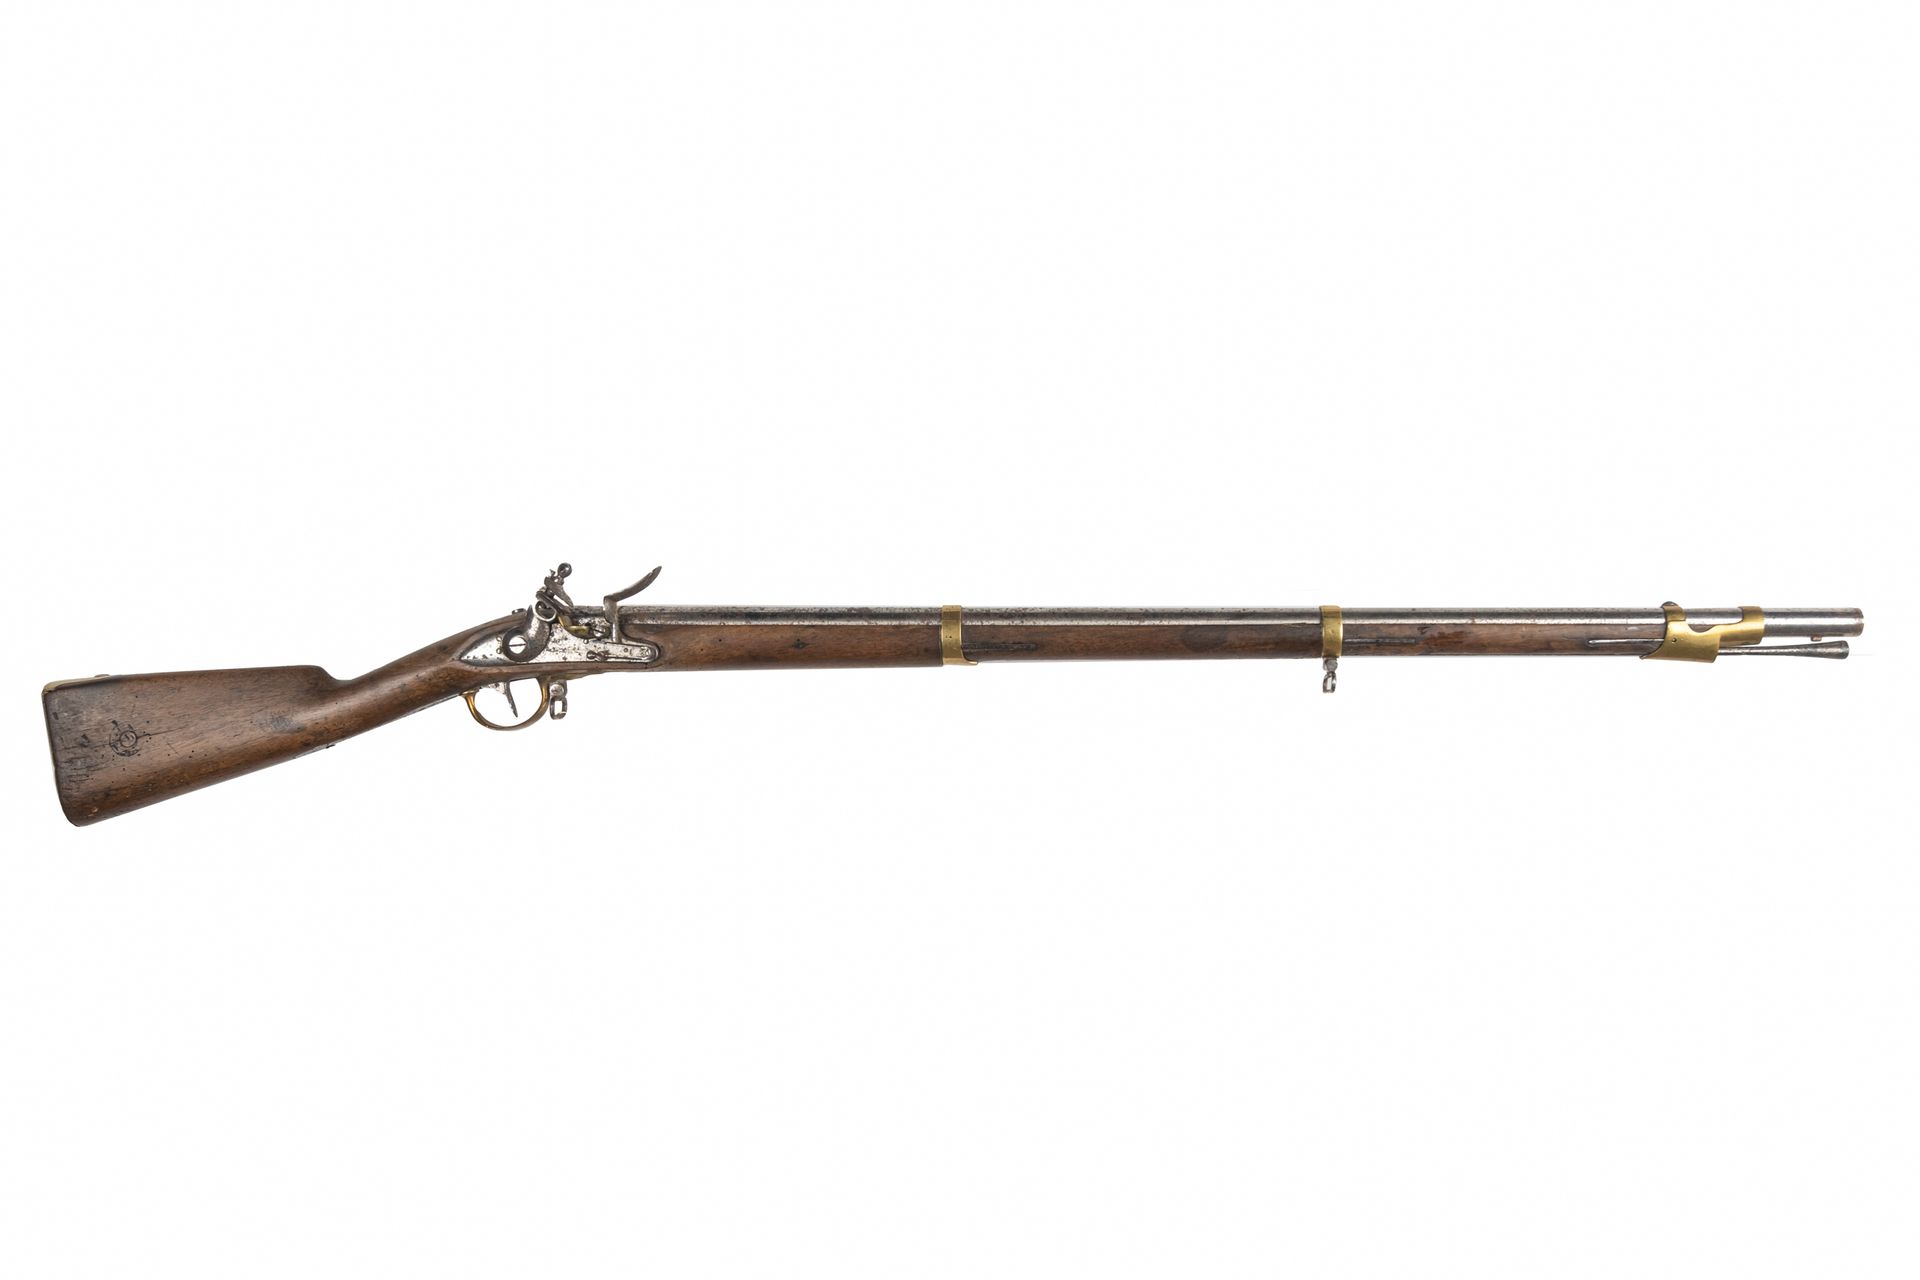 Null 龙牌燧发枪1822型。

圆形枪管，有雷鸣般的声音，日期为1821年。刻有 "Mre Rle de Saint Etienne "的锁，打孔的黄铜配件&hellip;